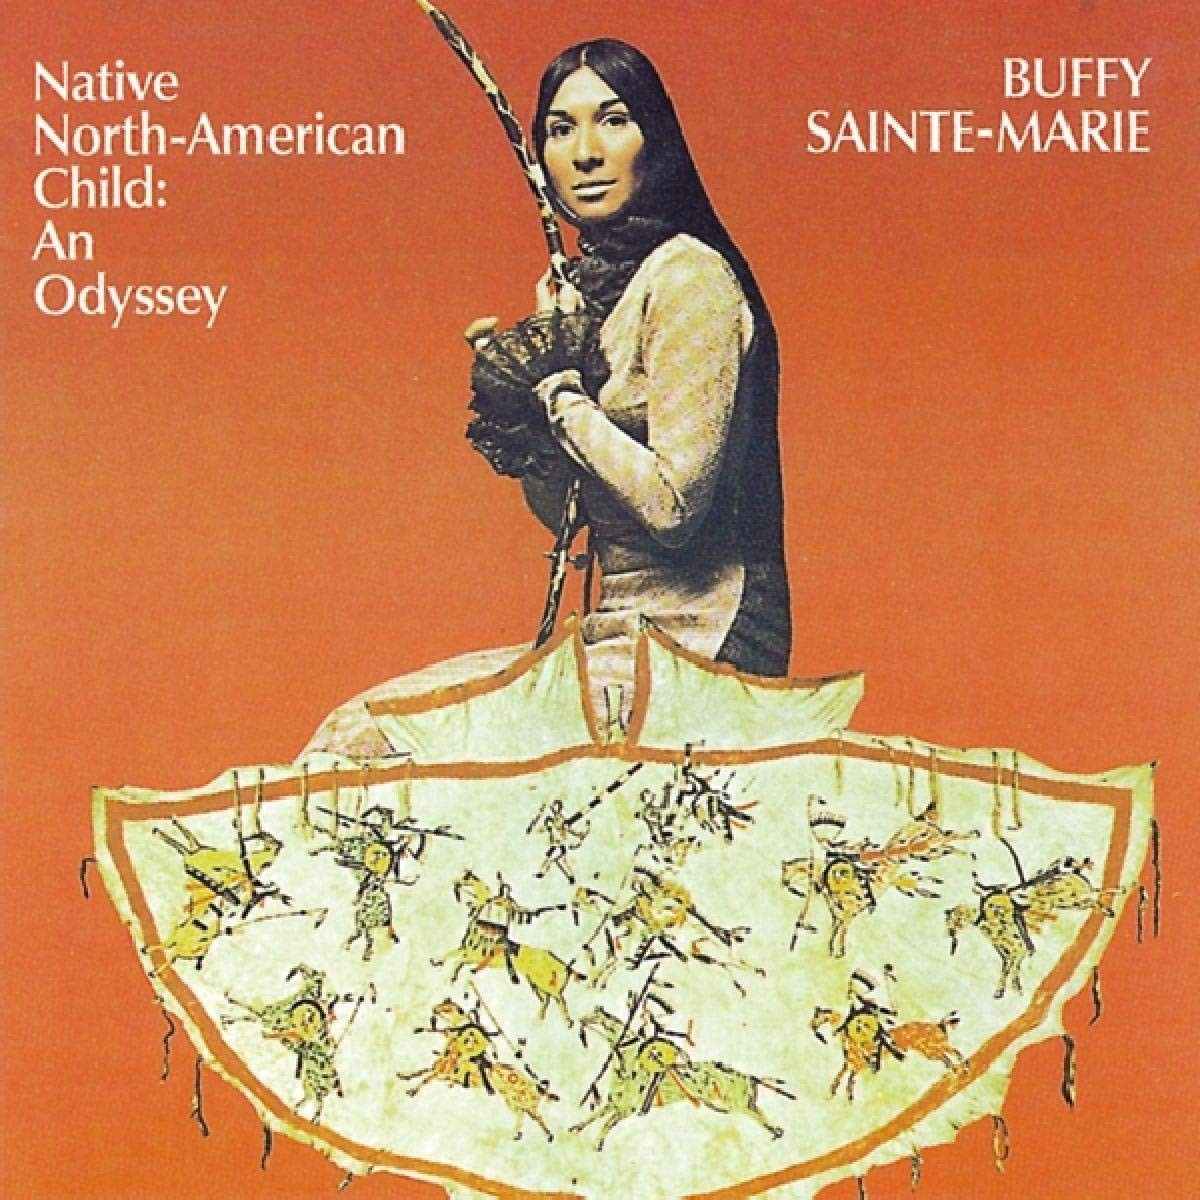 Buffy Sainte Marie - Native North-American Child: An Odyssey